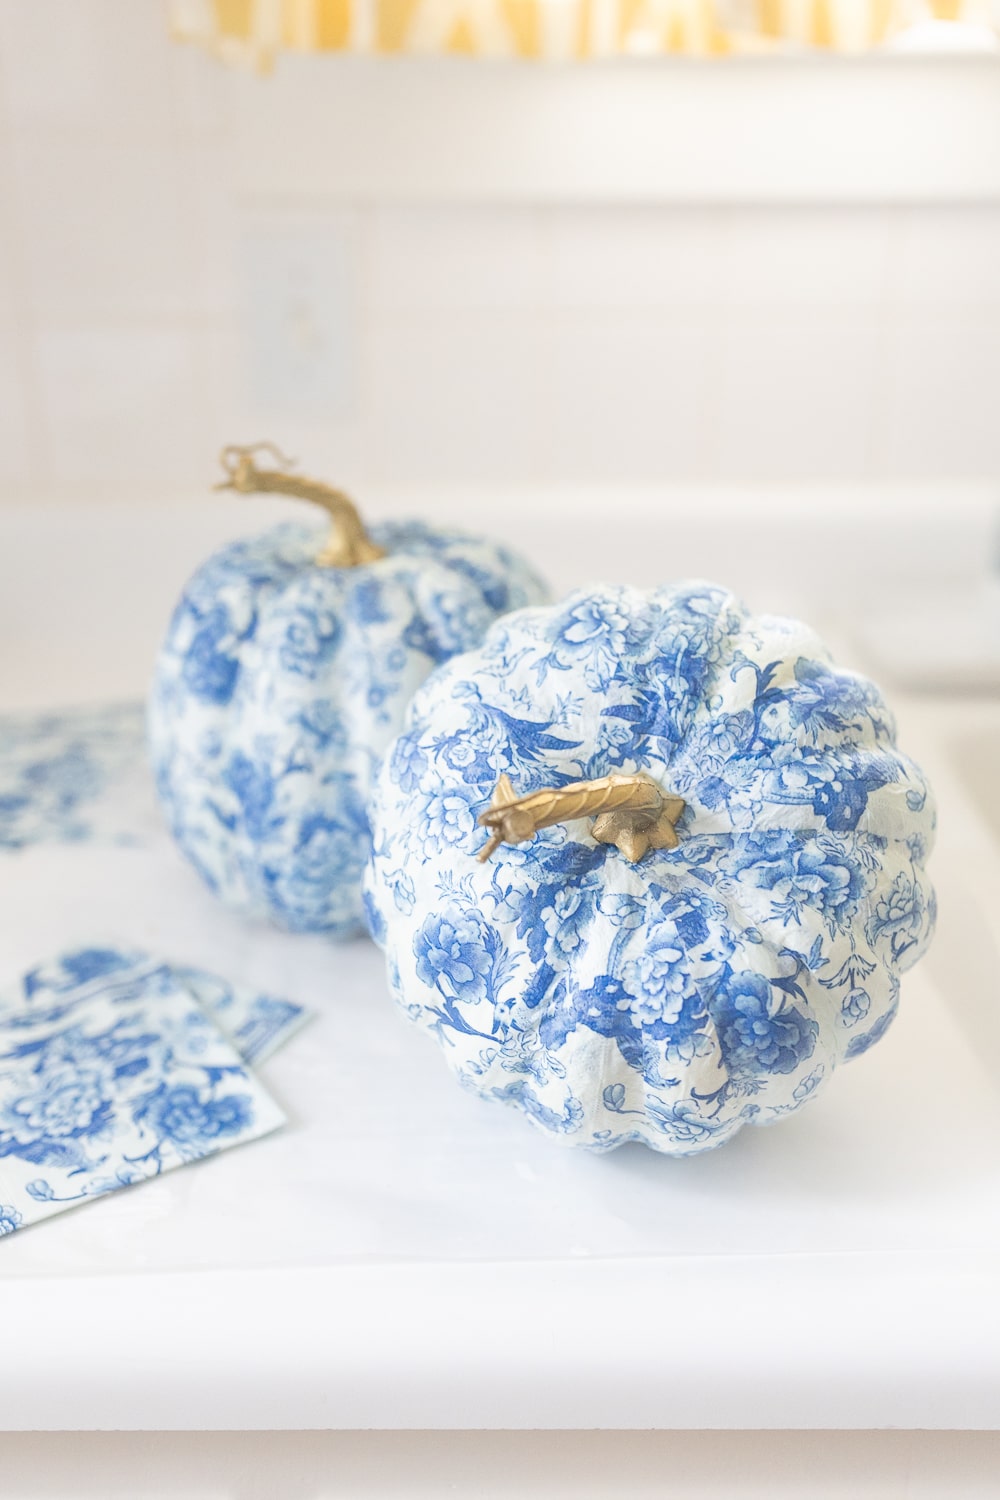 Decoupage pumpkins tutorial from blogger Stephanie Ziajka on Diary of a Debutante